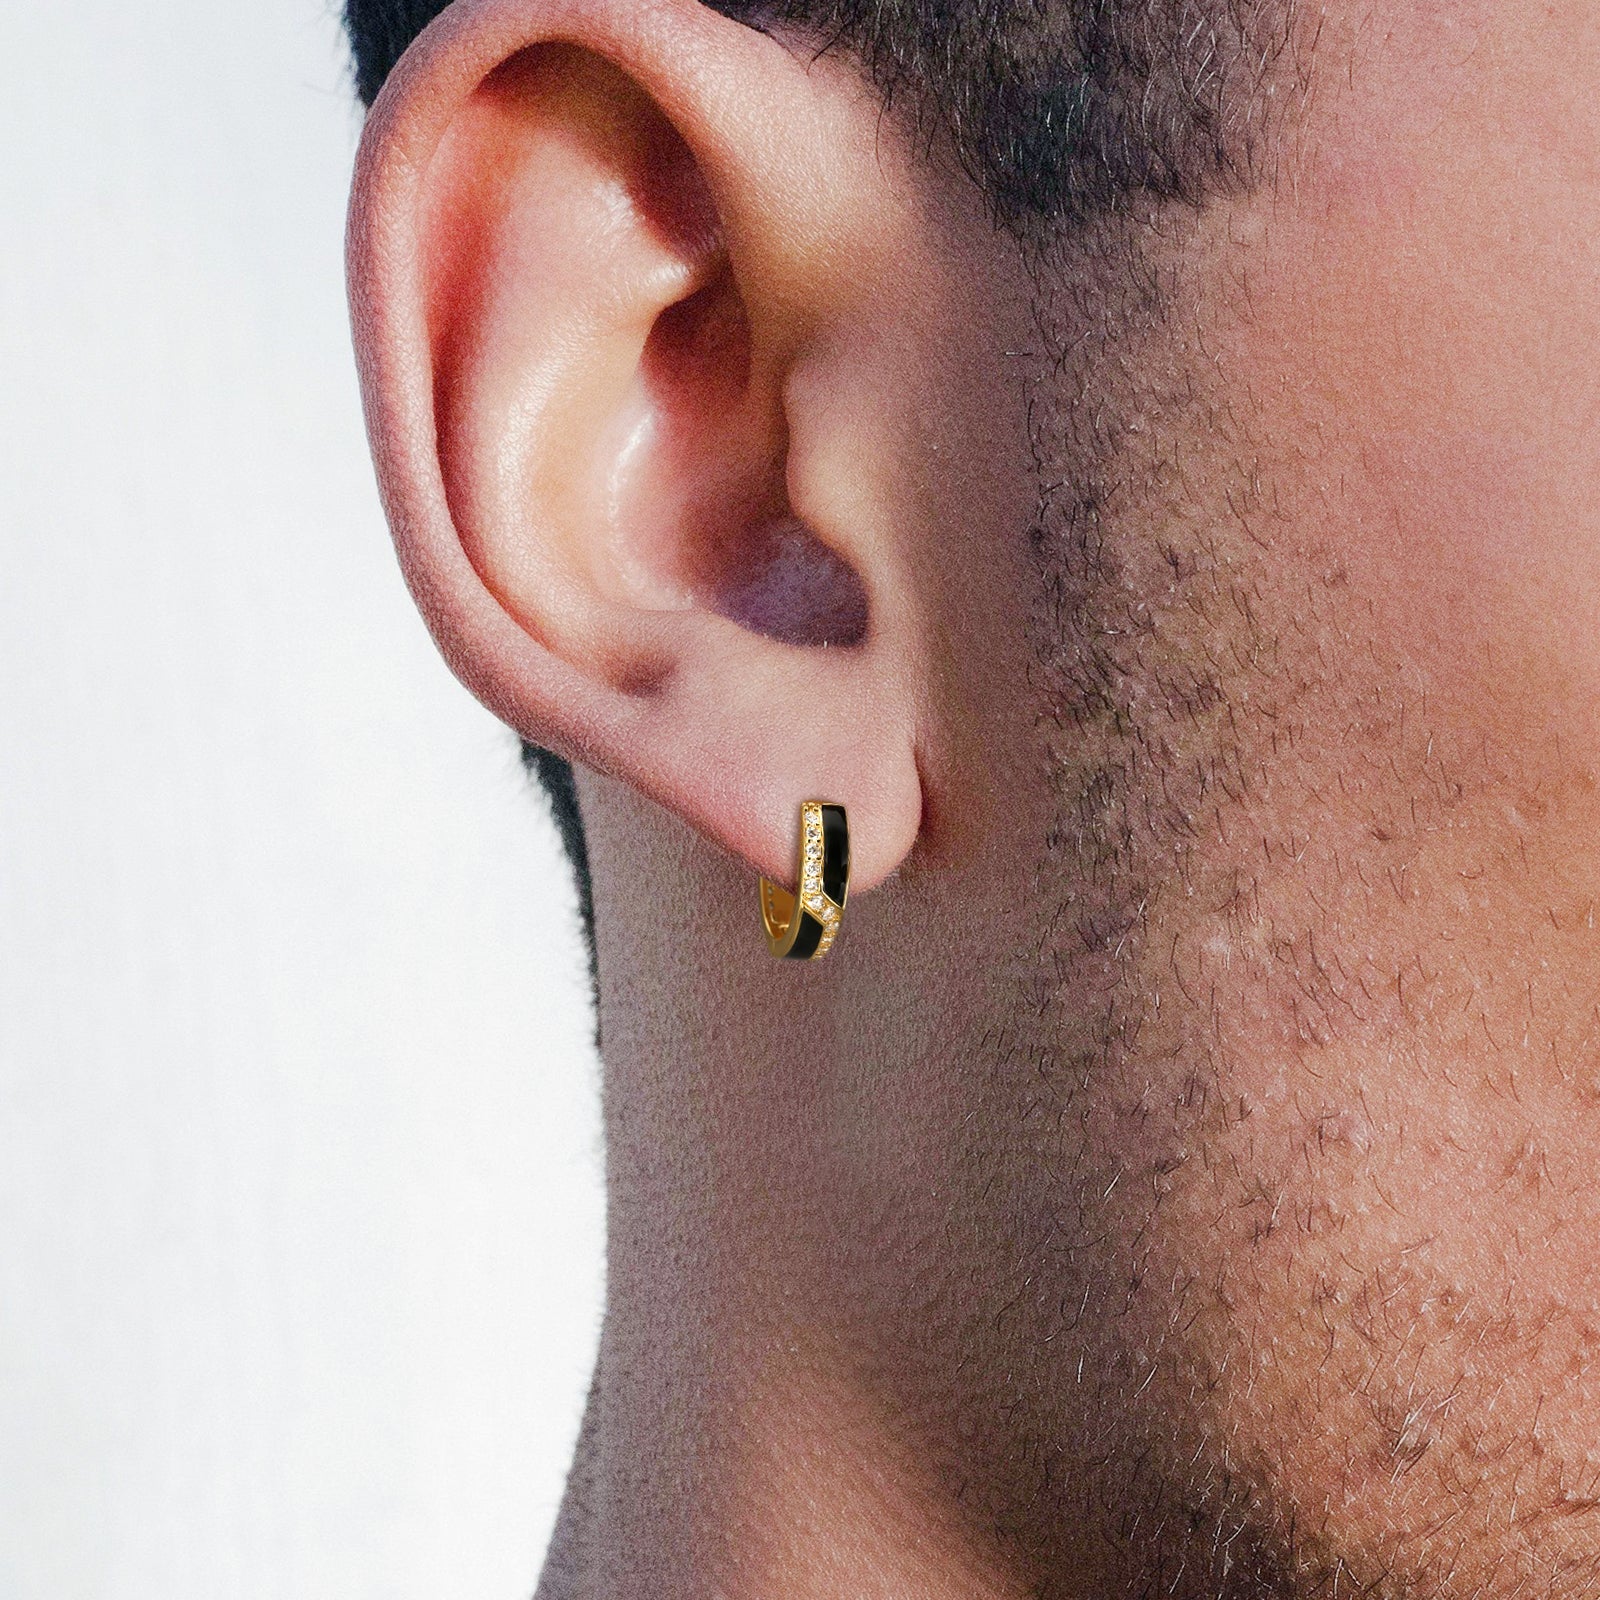 Wholesale Men's Earrings 15mm Iced Black Hoop Earrings for Men